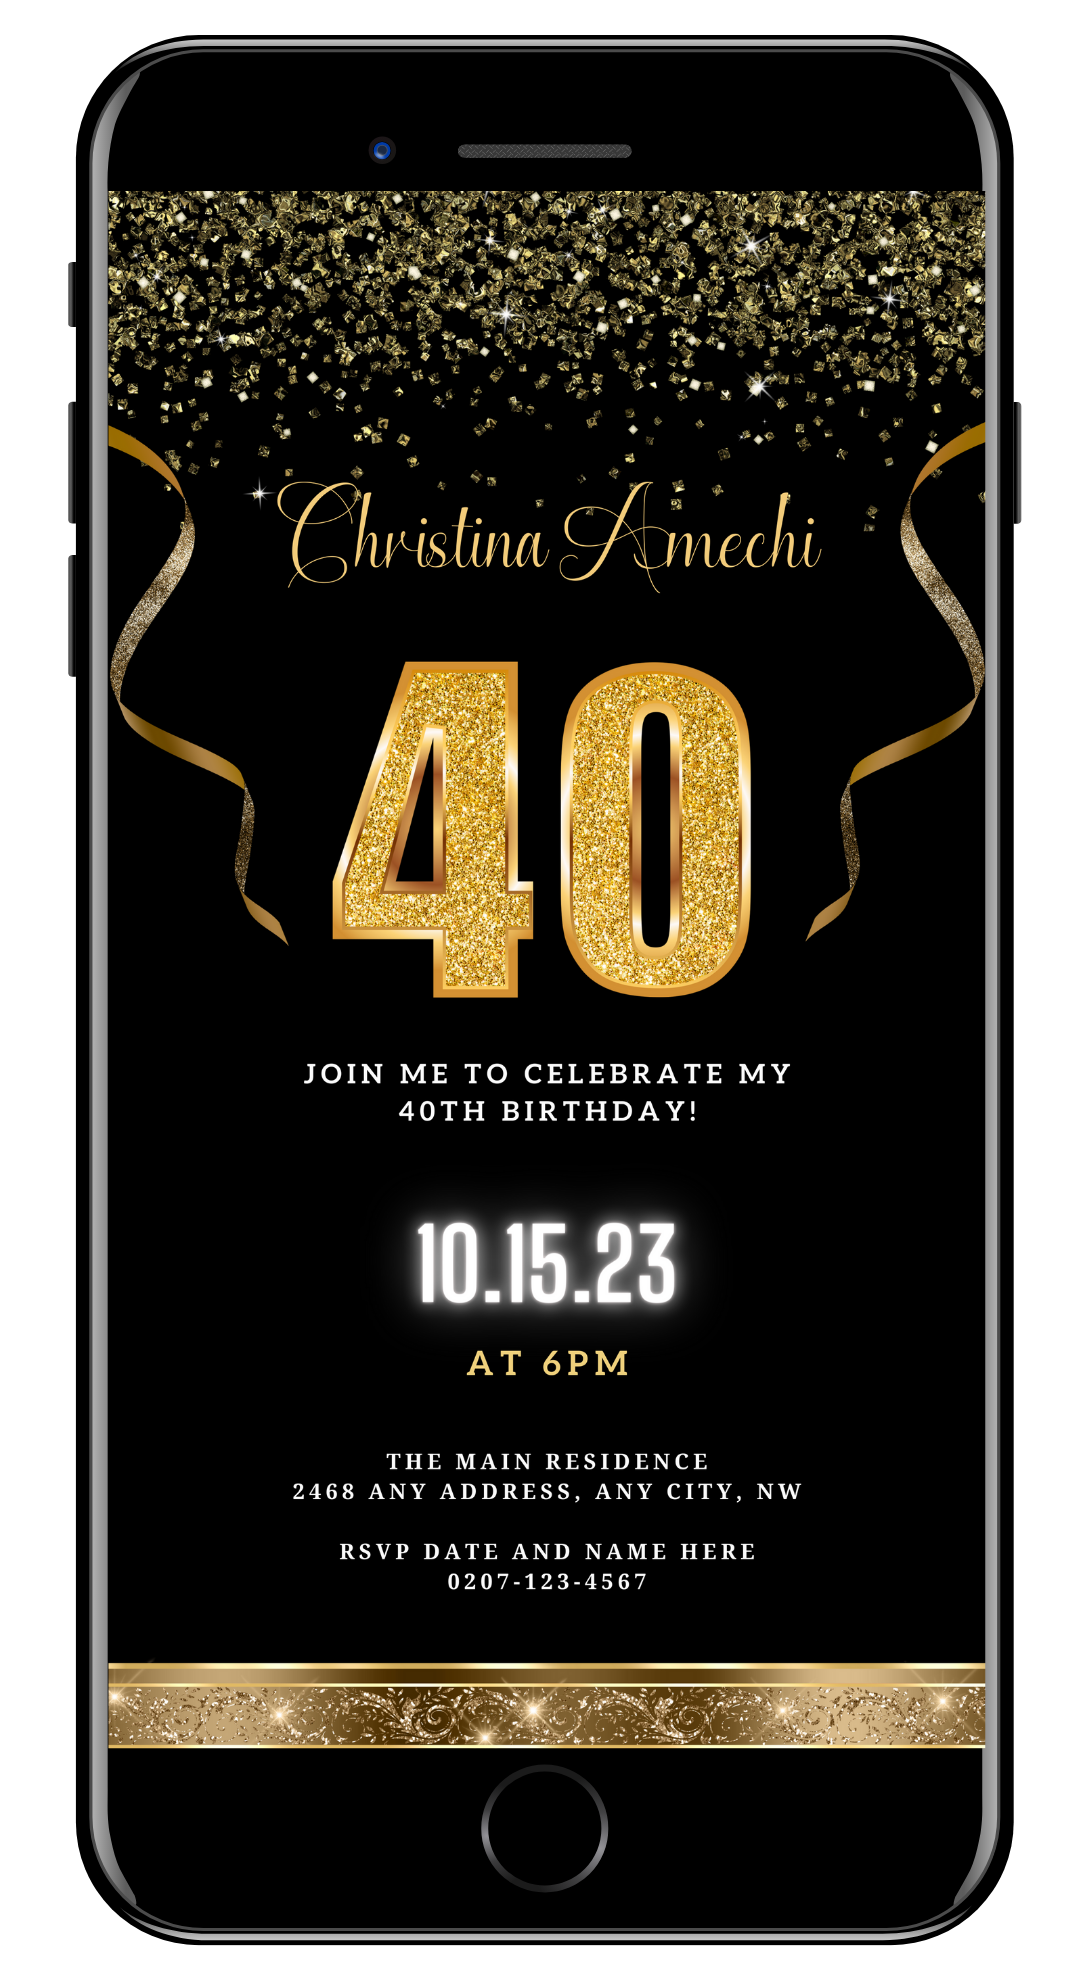 Black Gold Confetti 40th Birthday Evite, customizable digital invitation template featuring gold confetti and text on a black background, editable via Canva for smartphones.